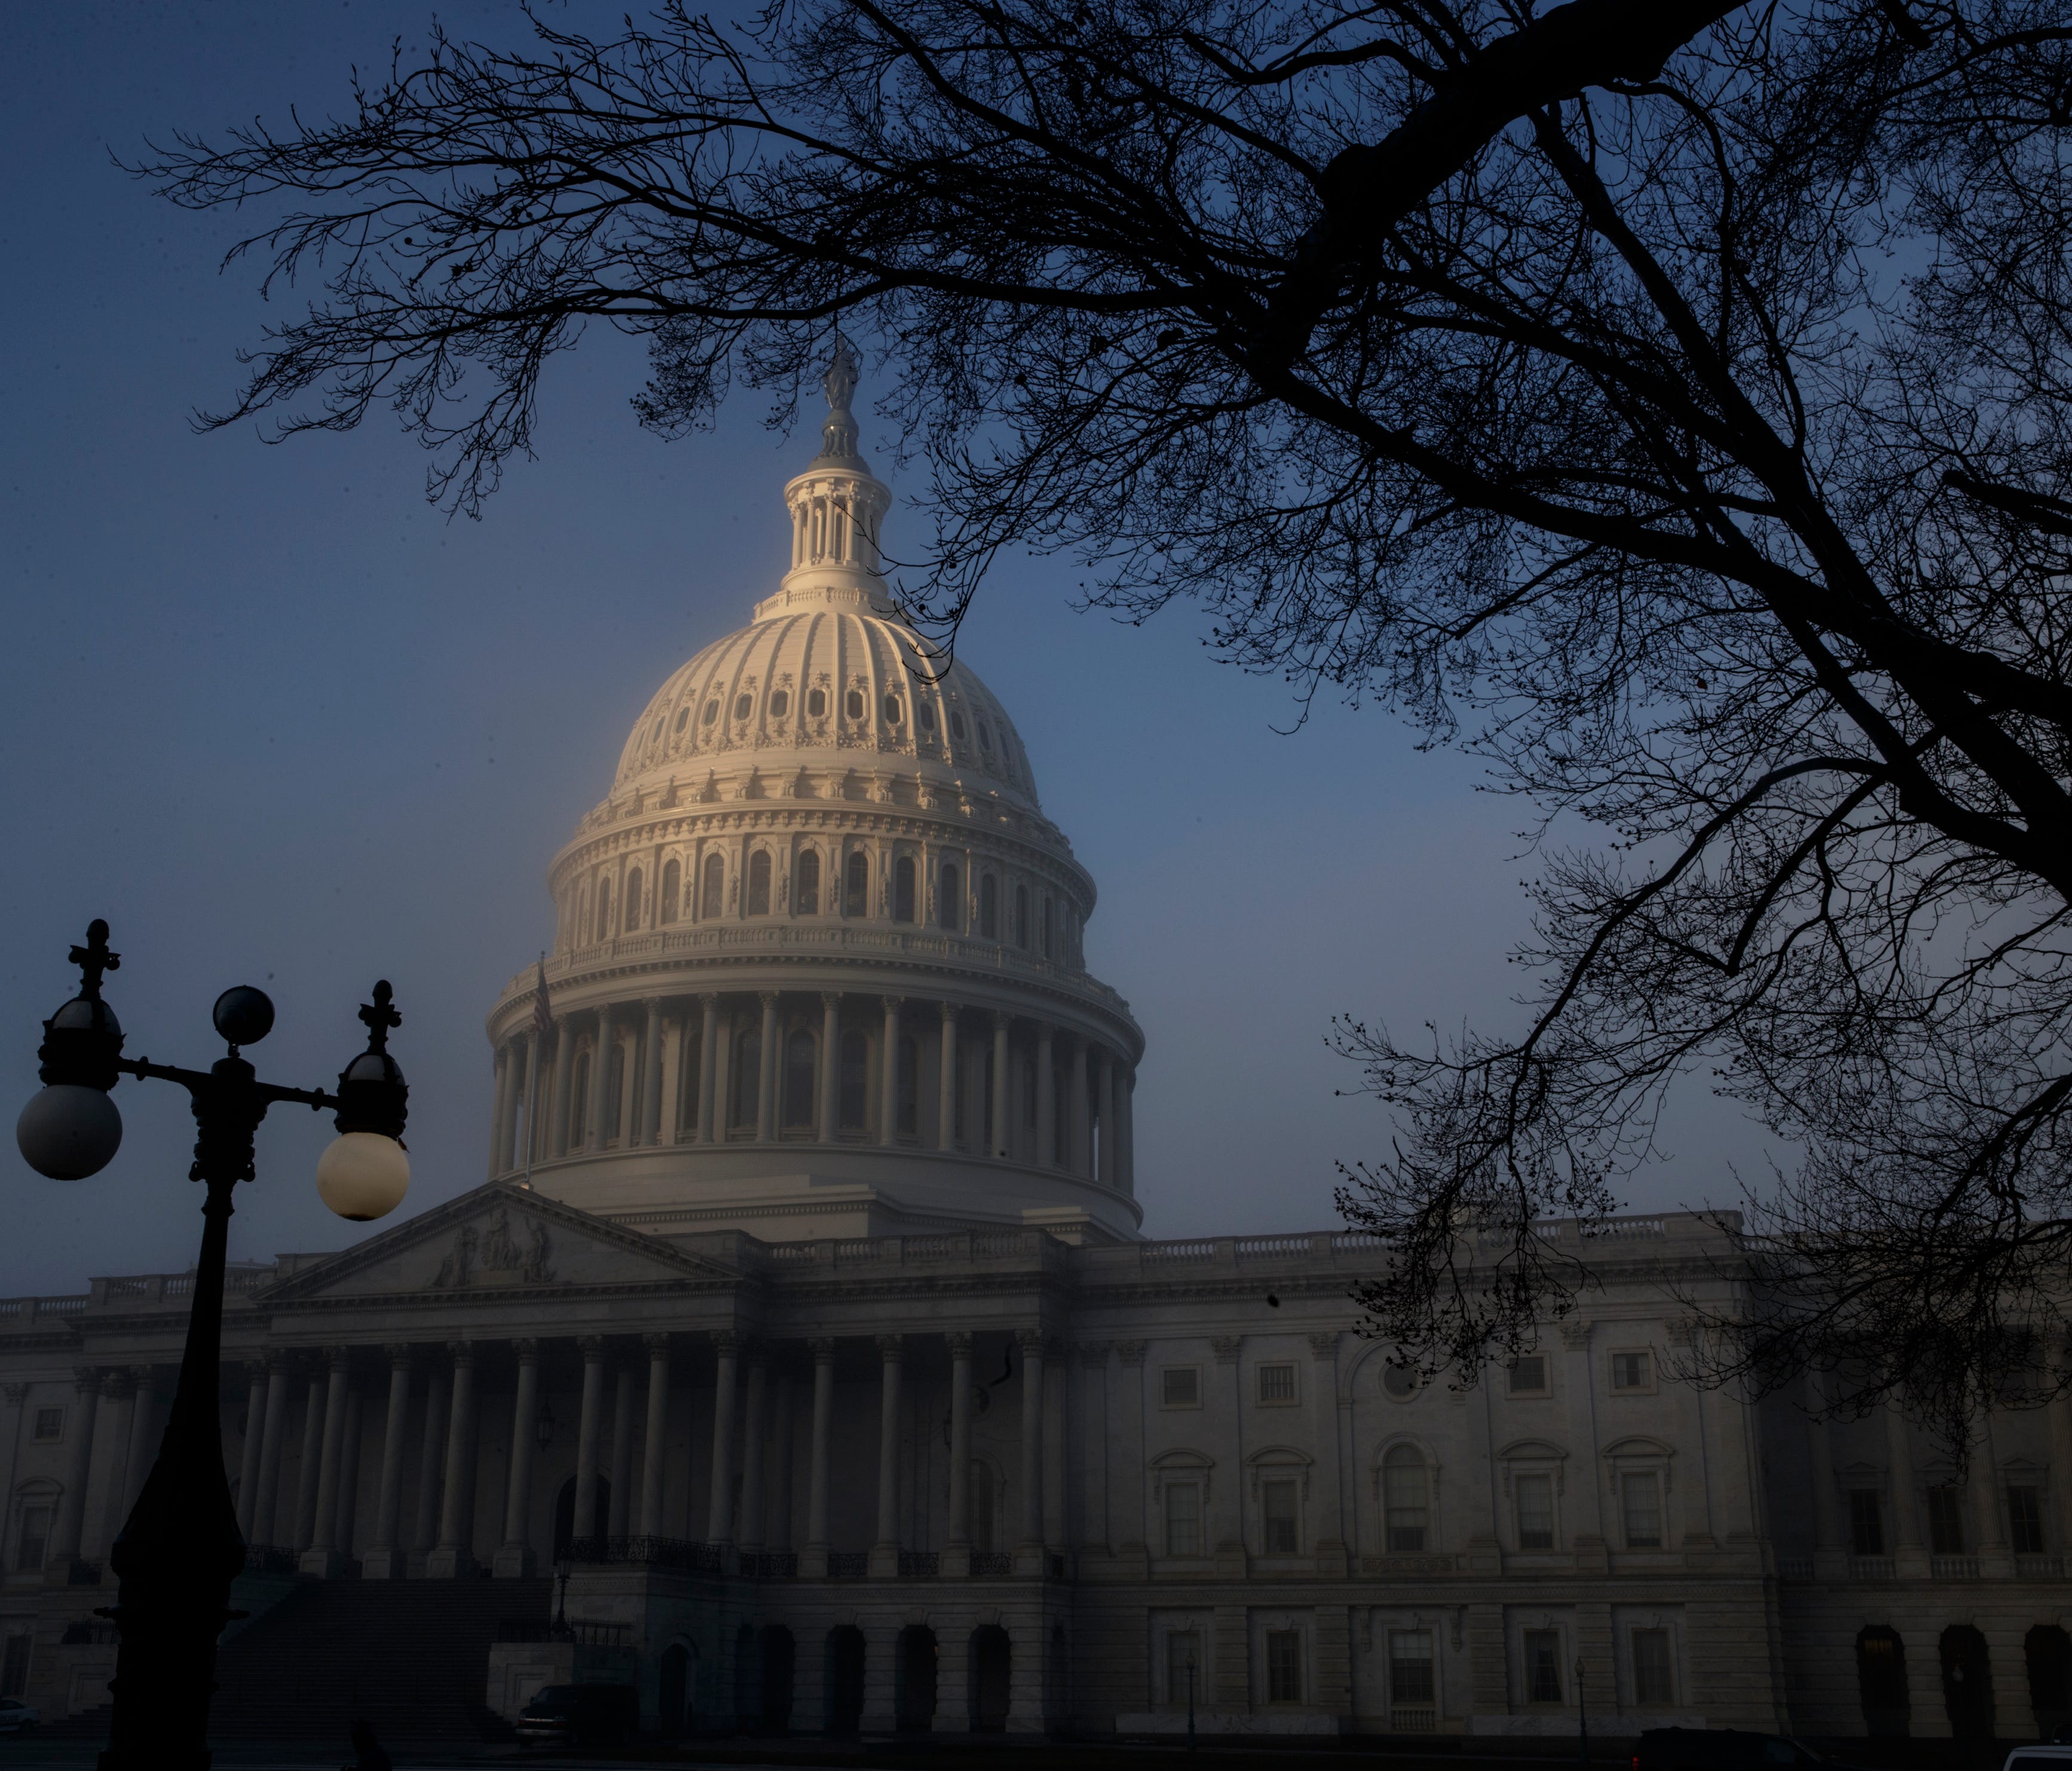 File photo taken in Jan. 2018 shows the U.S. Capitol in Washington, D.C.